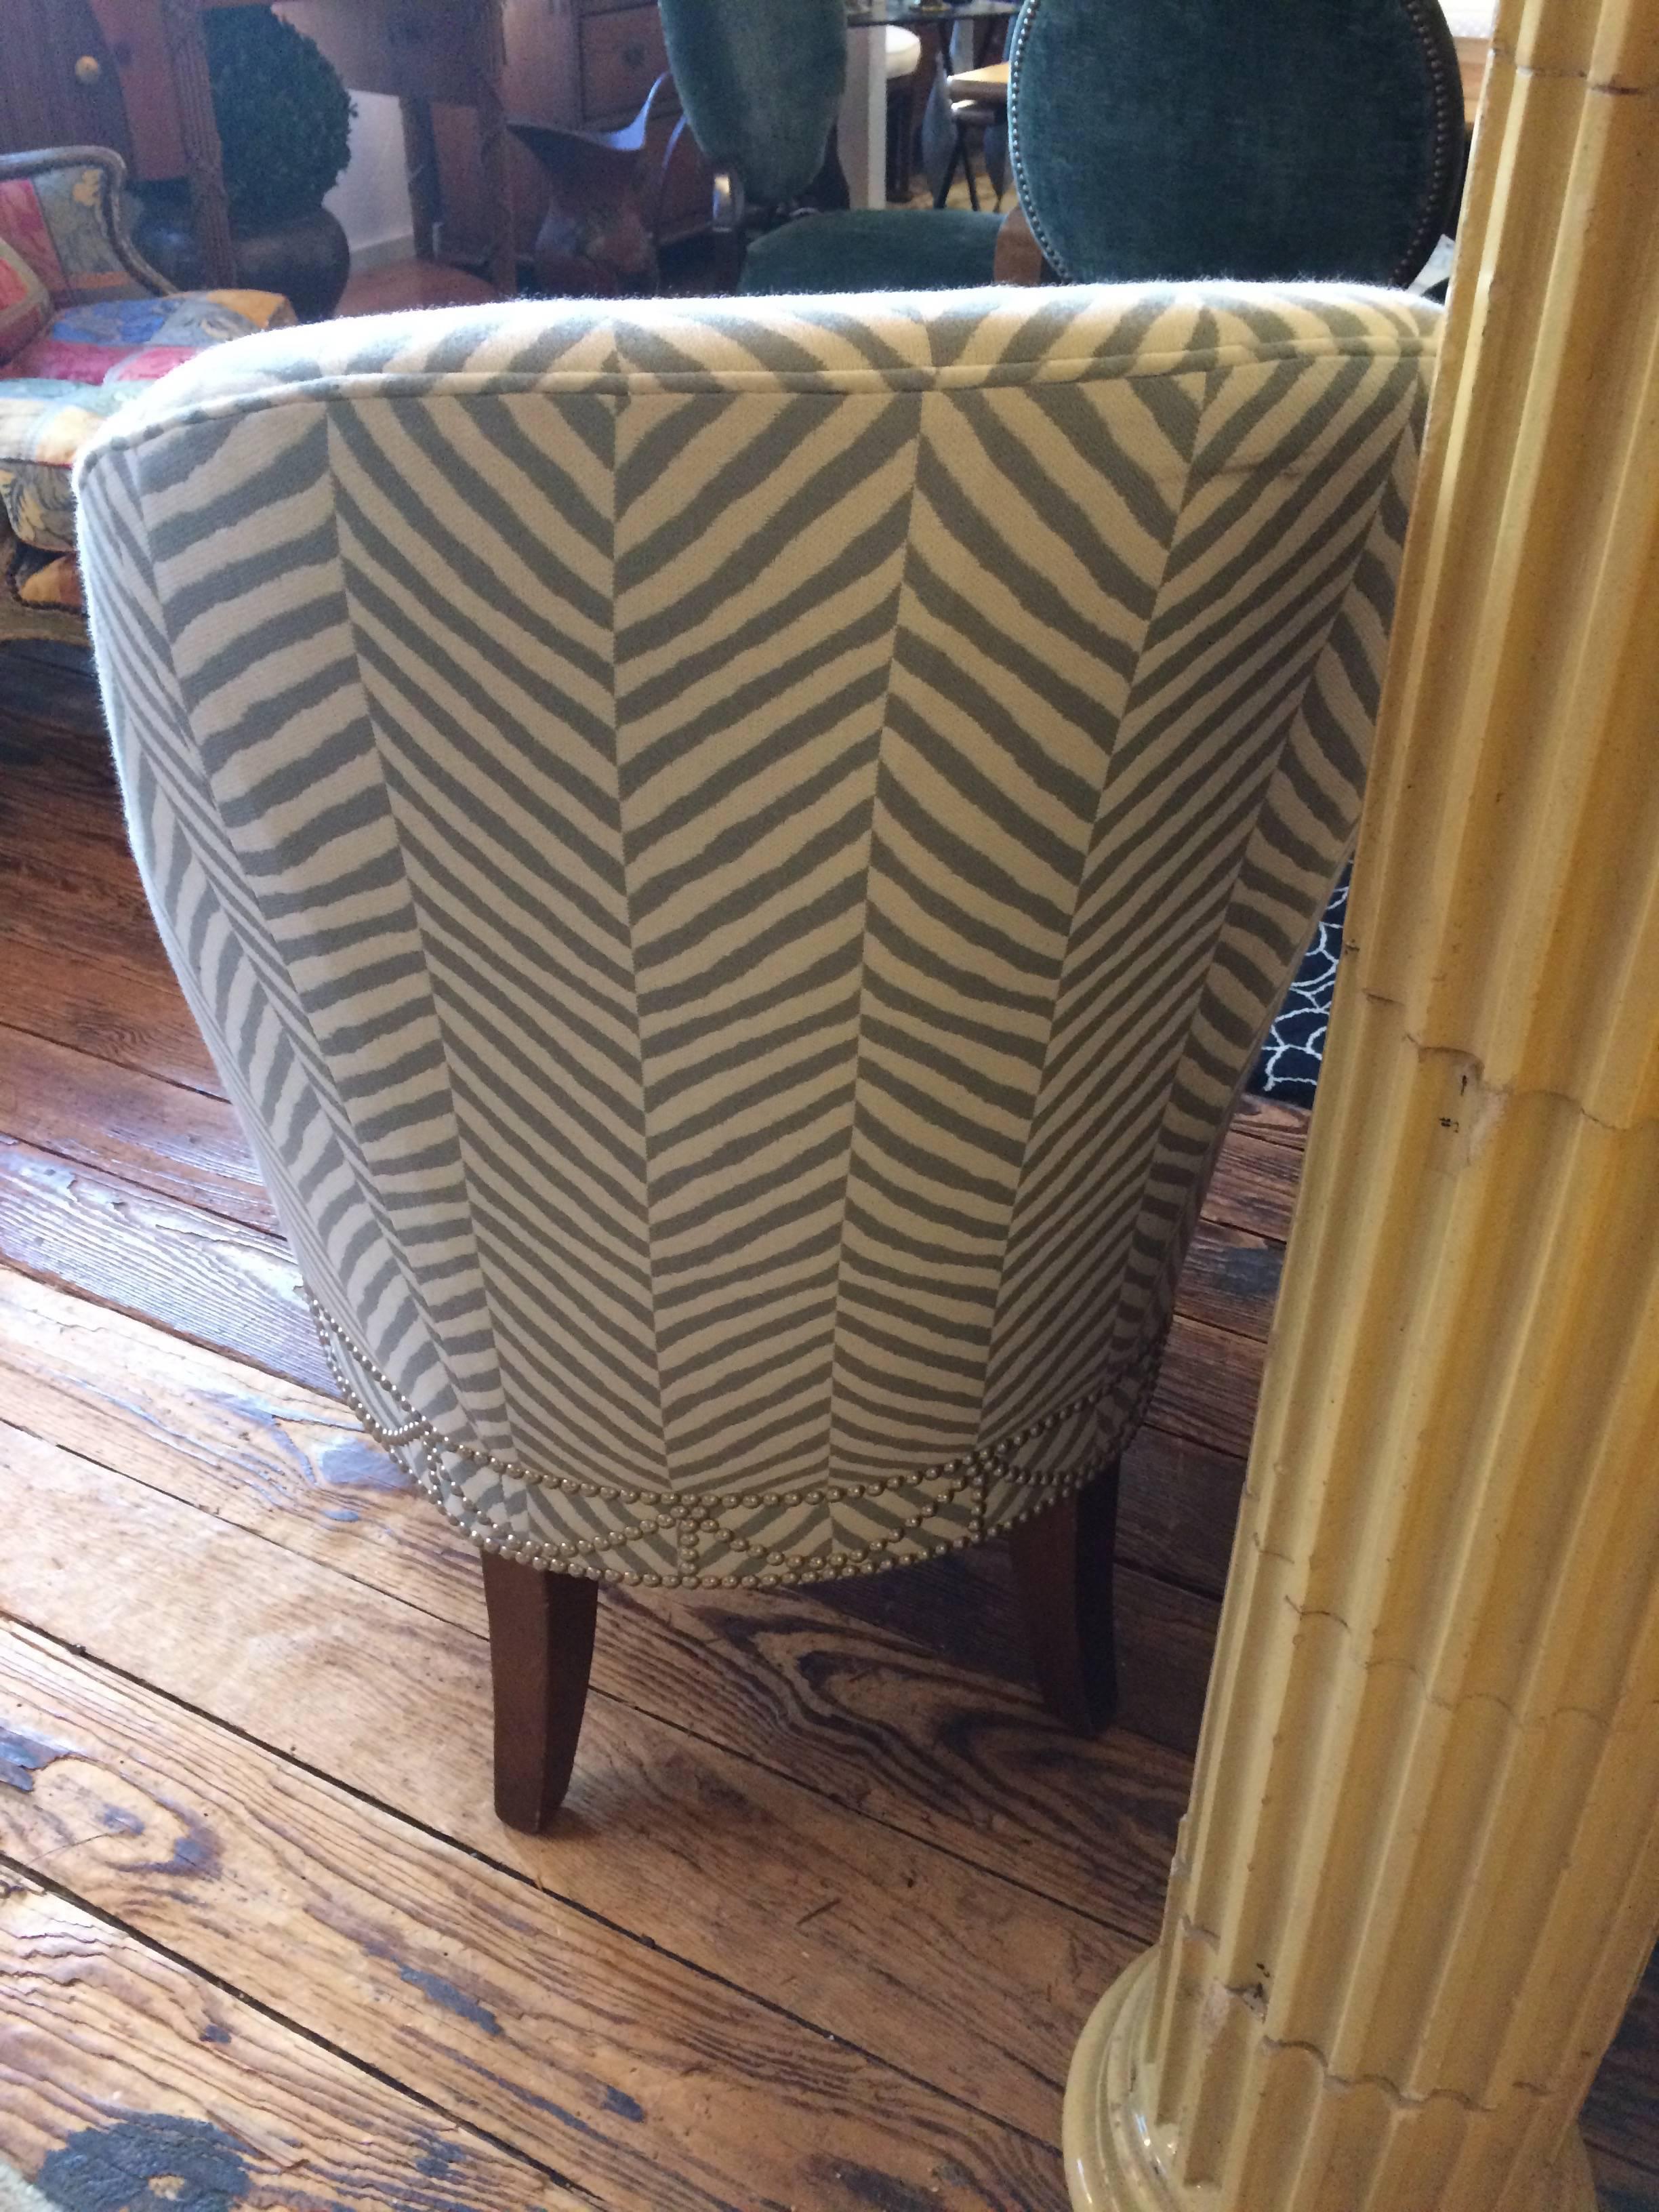 Stunning Grey and White Chevron Upholstered Club Chair (amerikanisch)